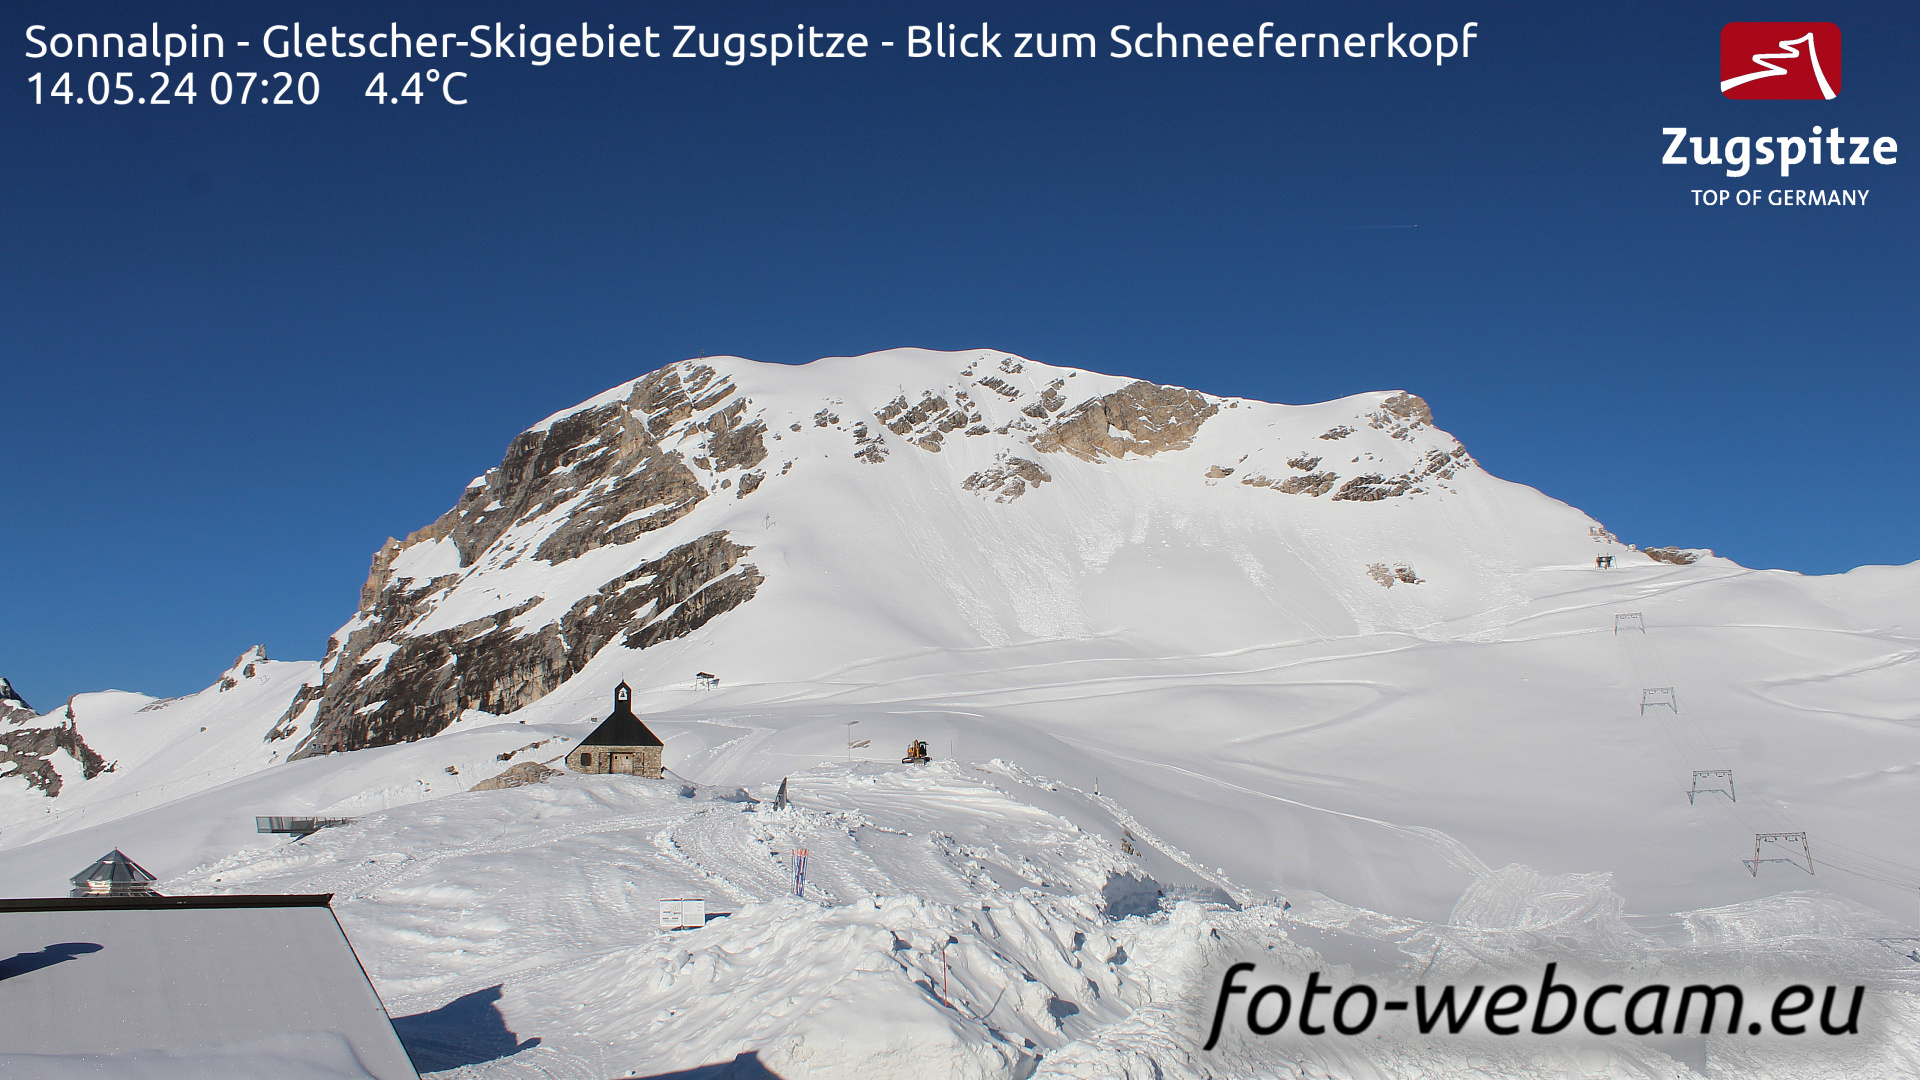 Zugspitze Mo. 07:24